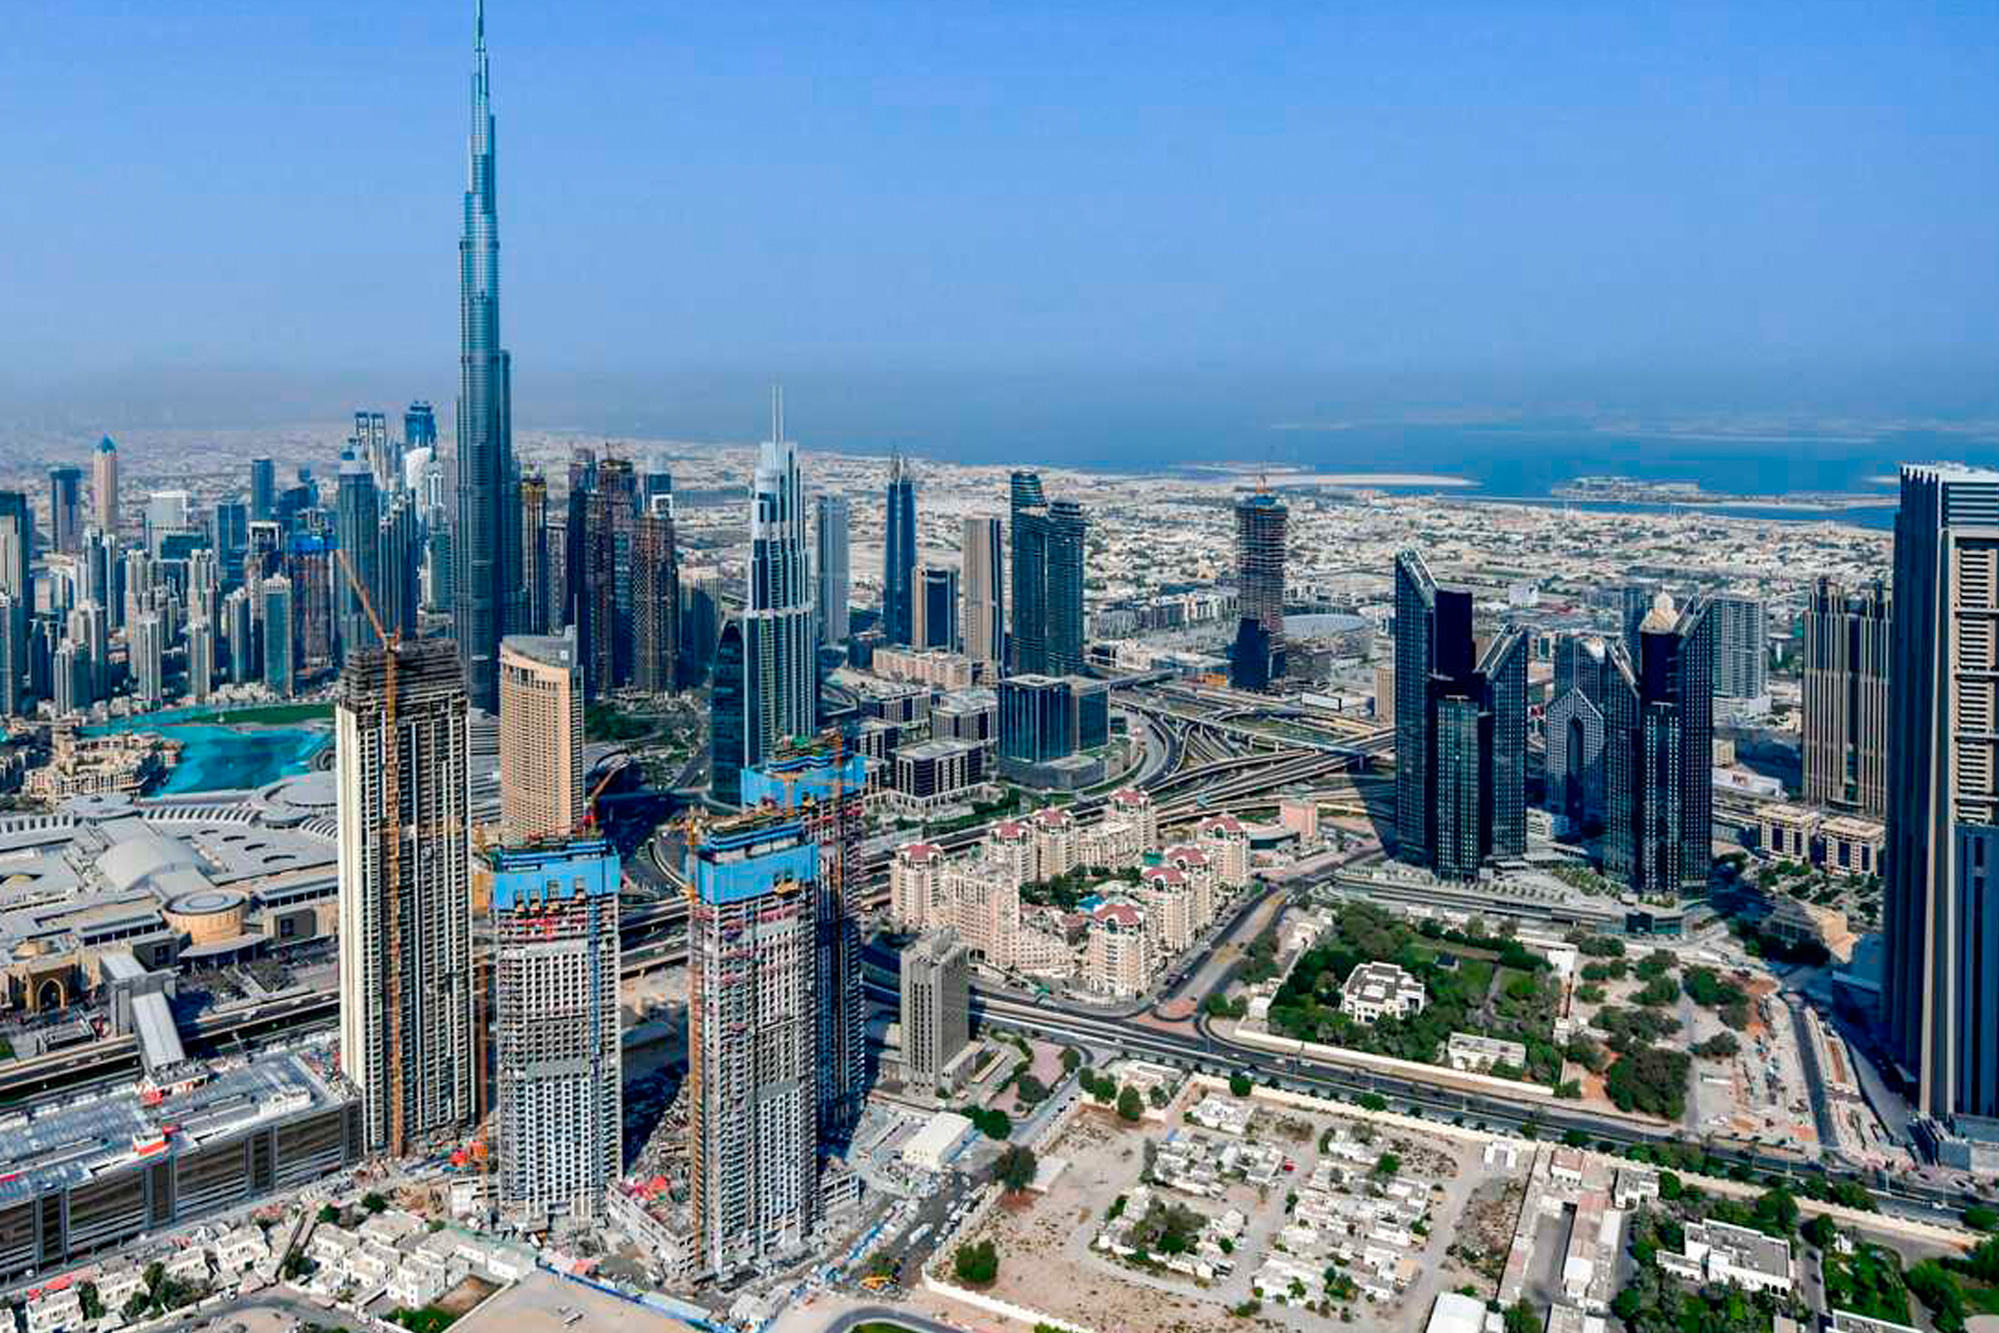 UAE,leading the New Arab Renaissance